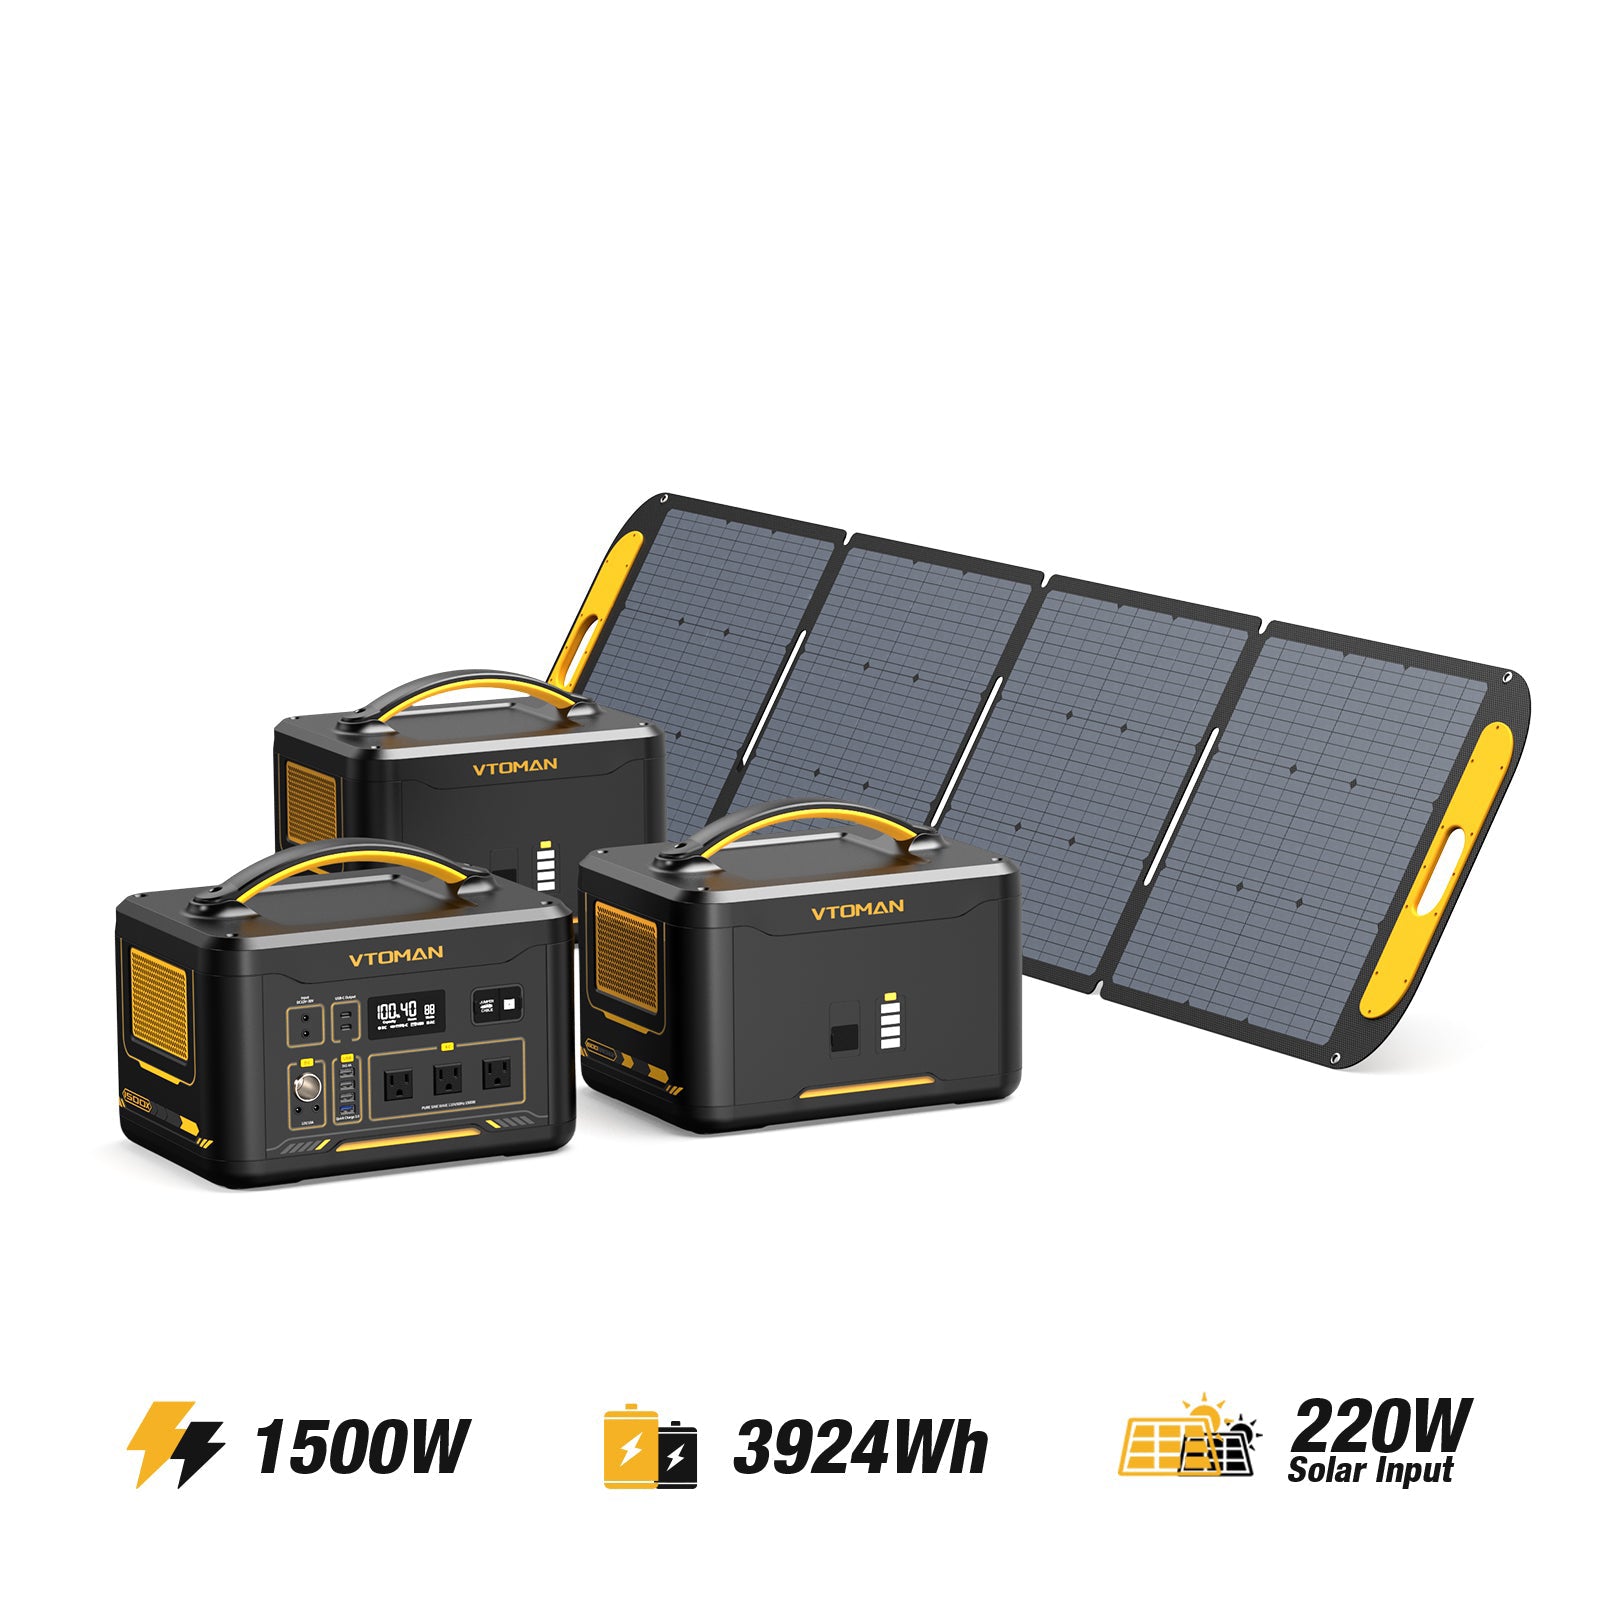 JUMP 1500+2*Extra battery+220w solar panel